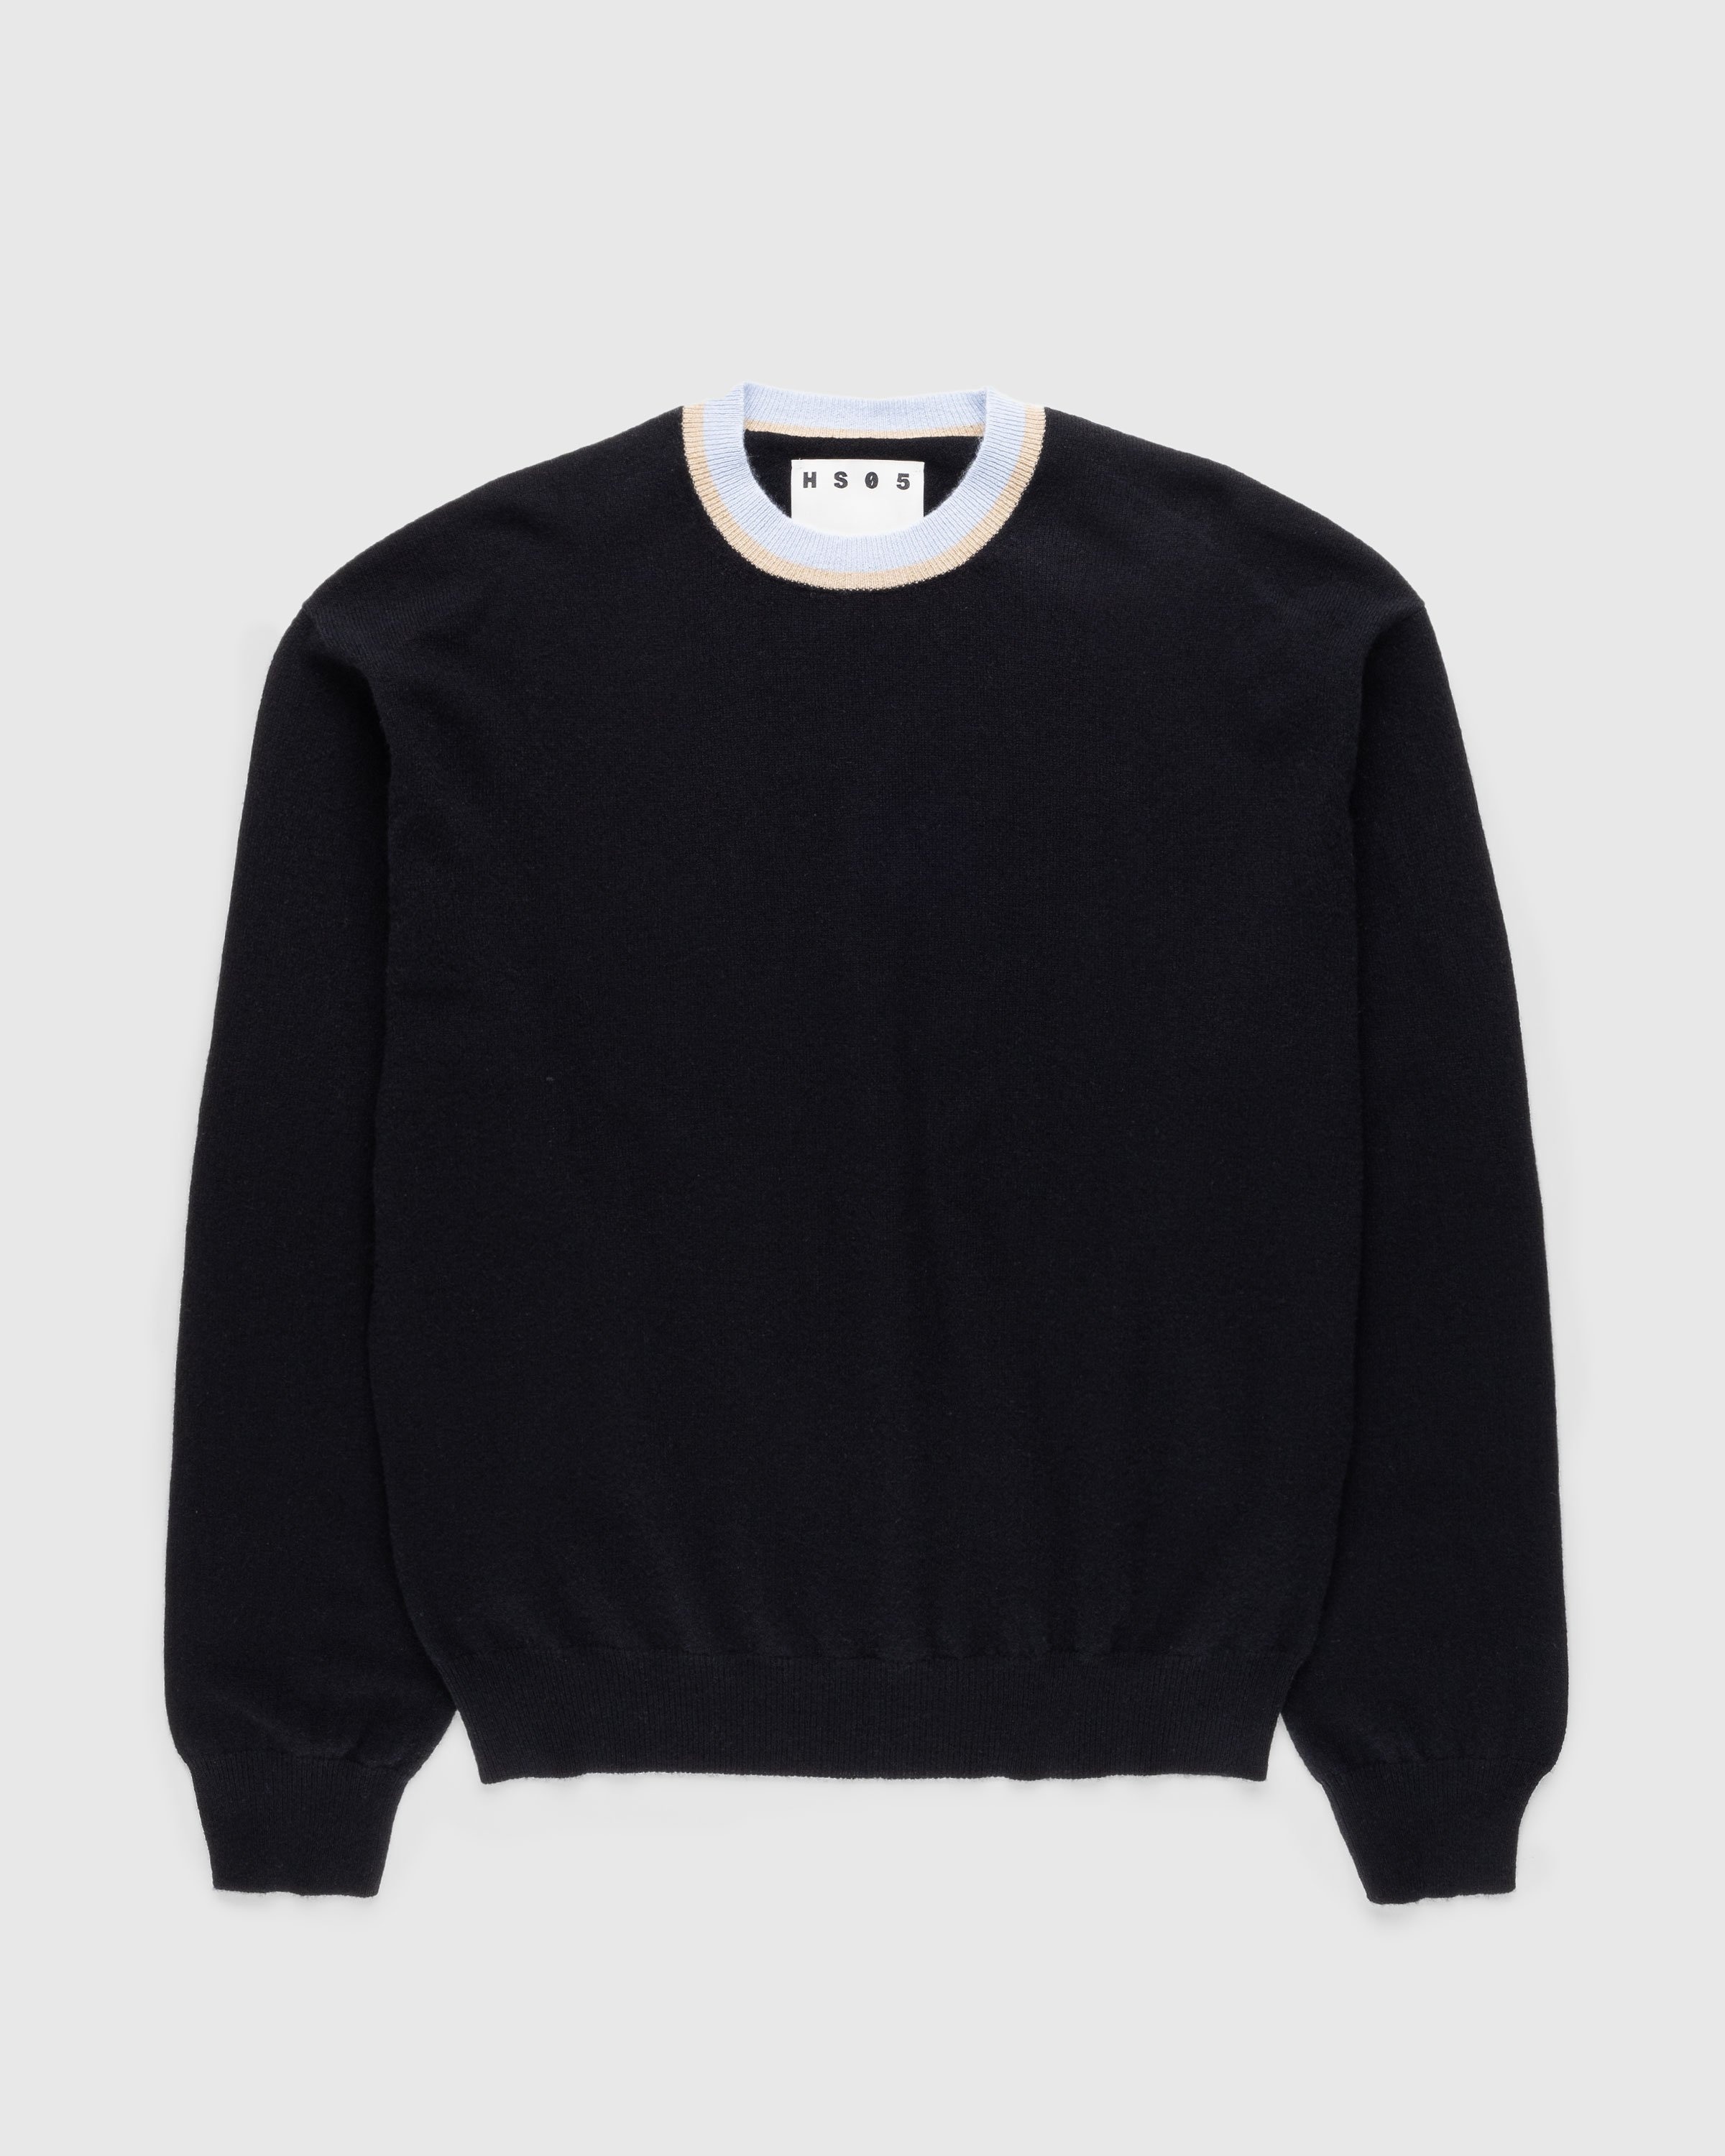 Highsnobiety HS05 – Cashmere Crew Sweater Black - Knitwear - Black - Image 1